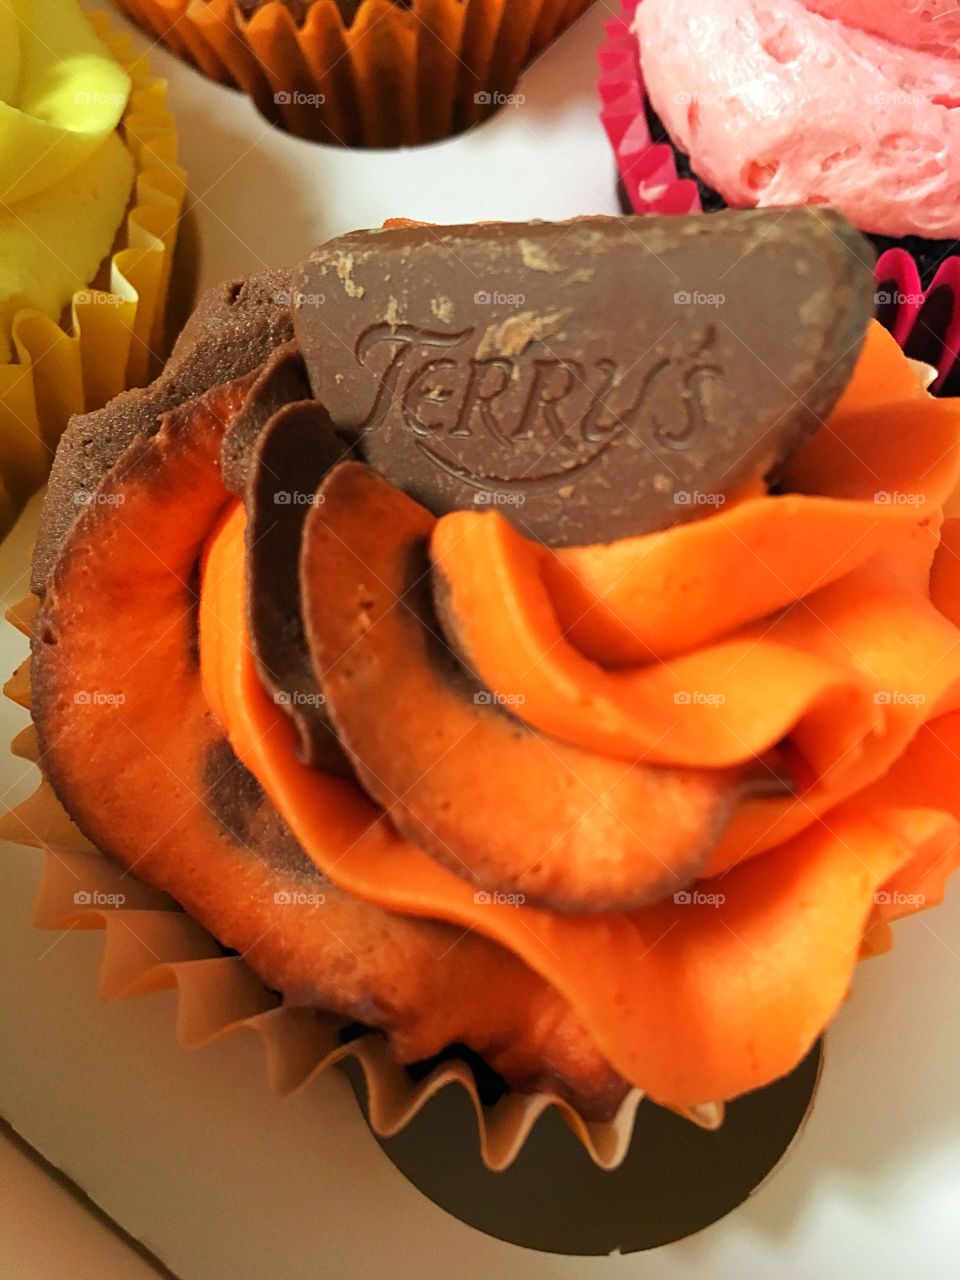 Terrys chocolate orange cupcake 